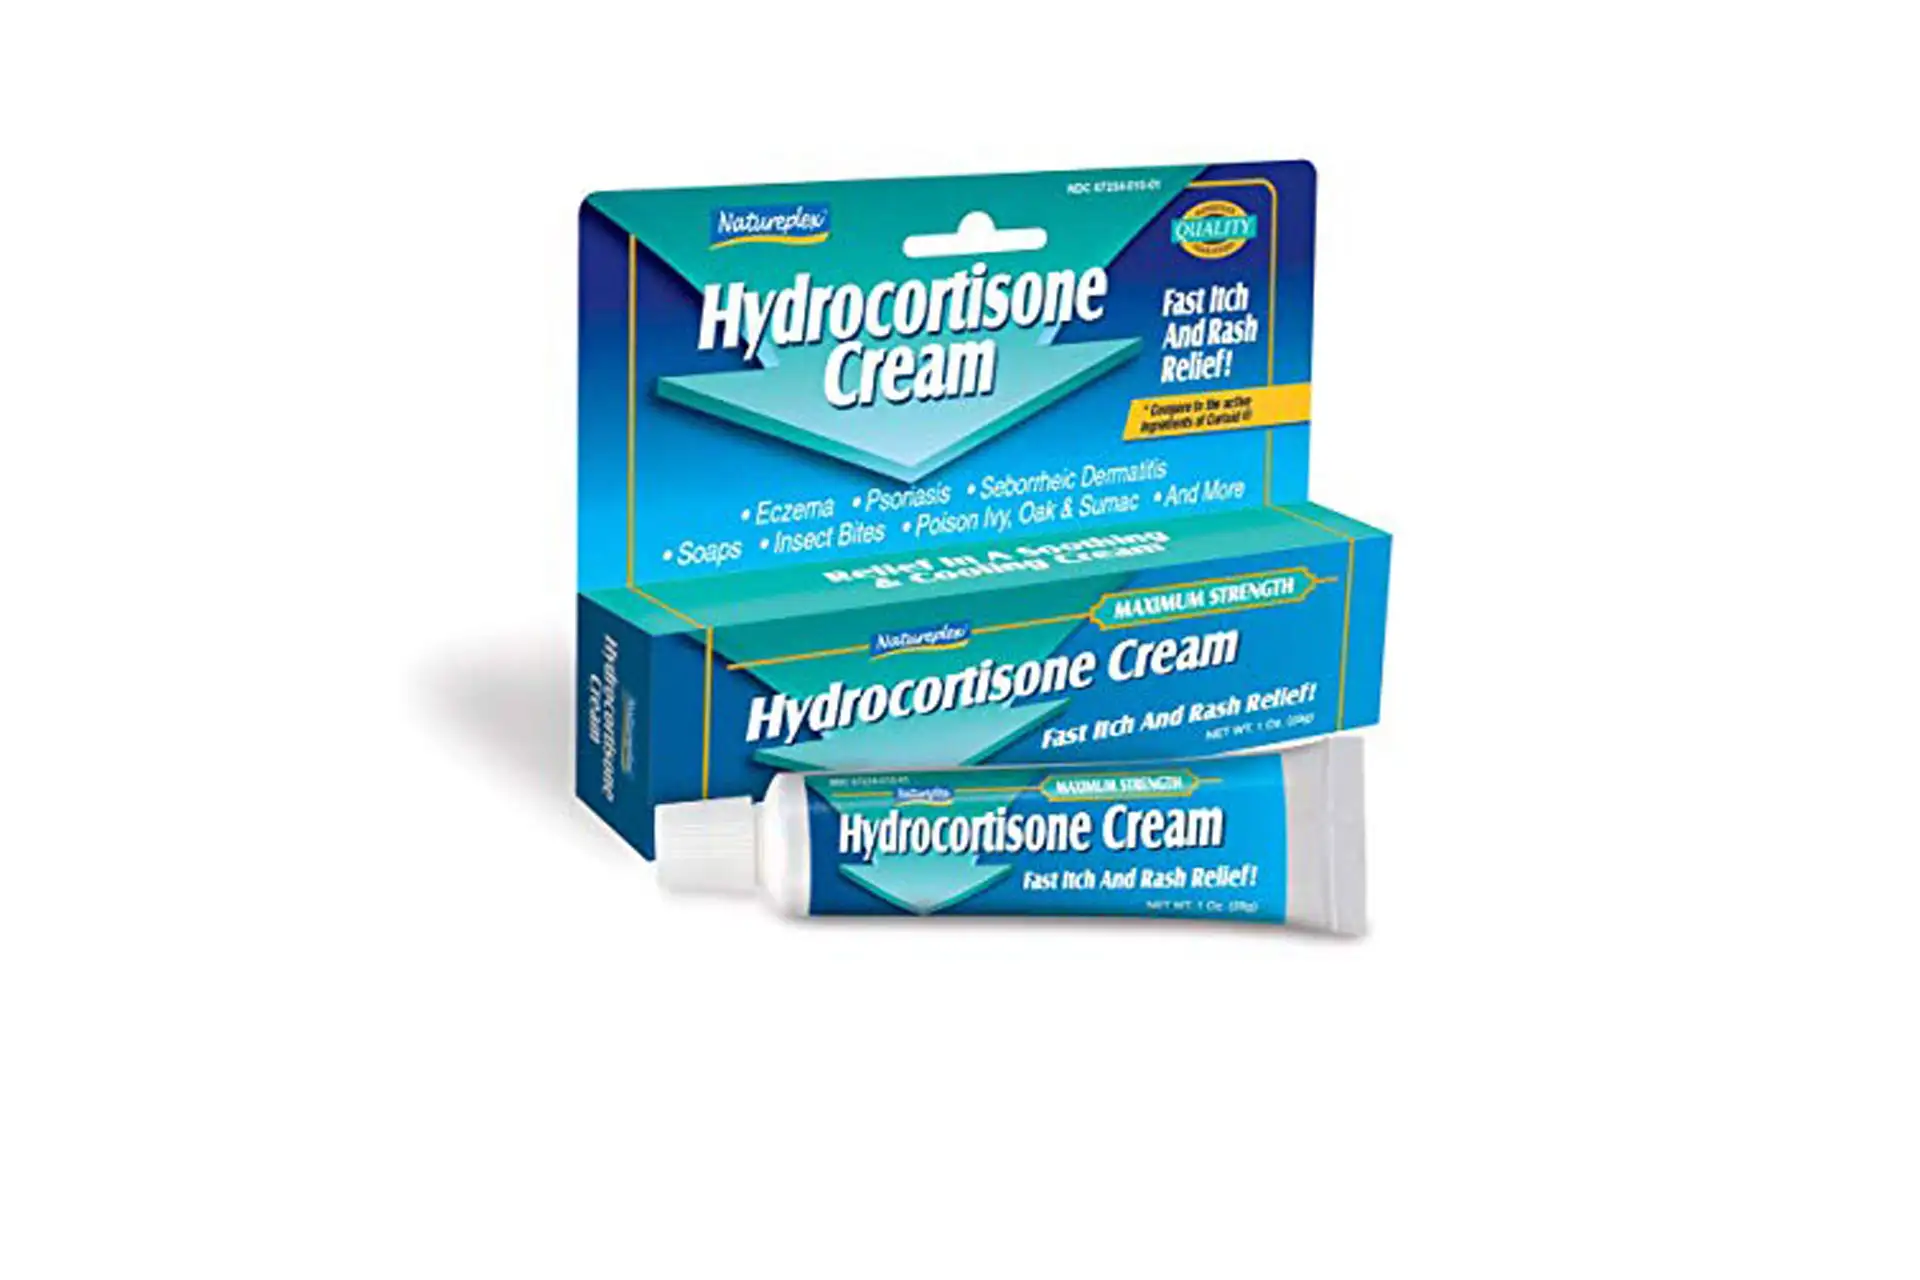 Hydrocortisone Cream; Courtesy of Amazon